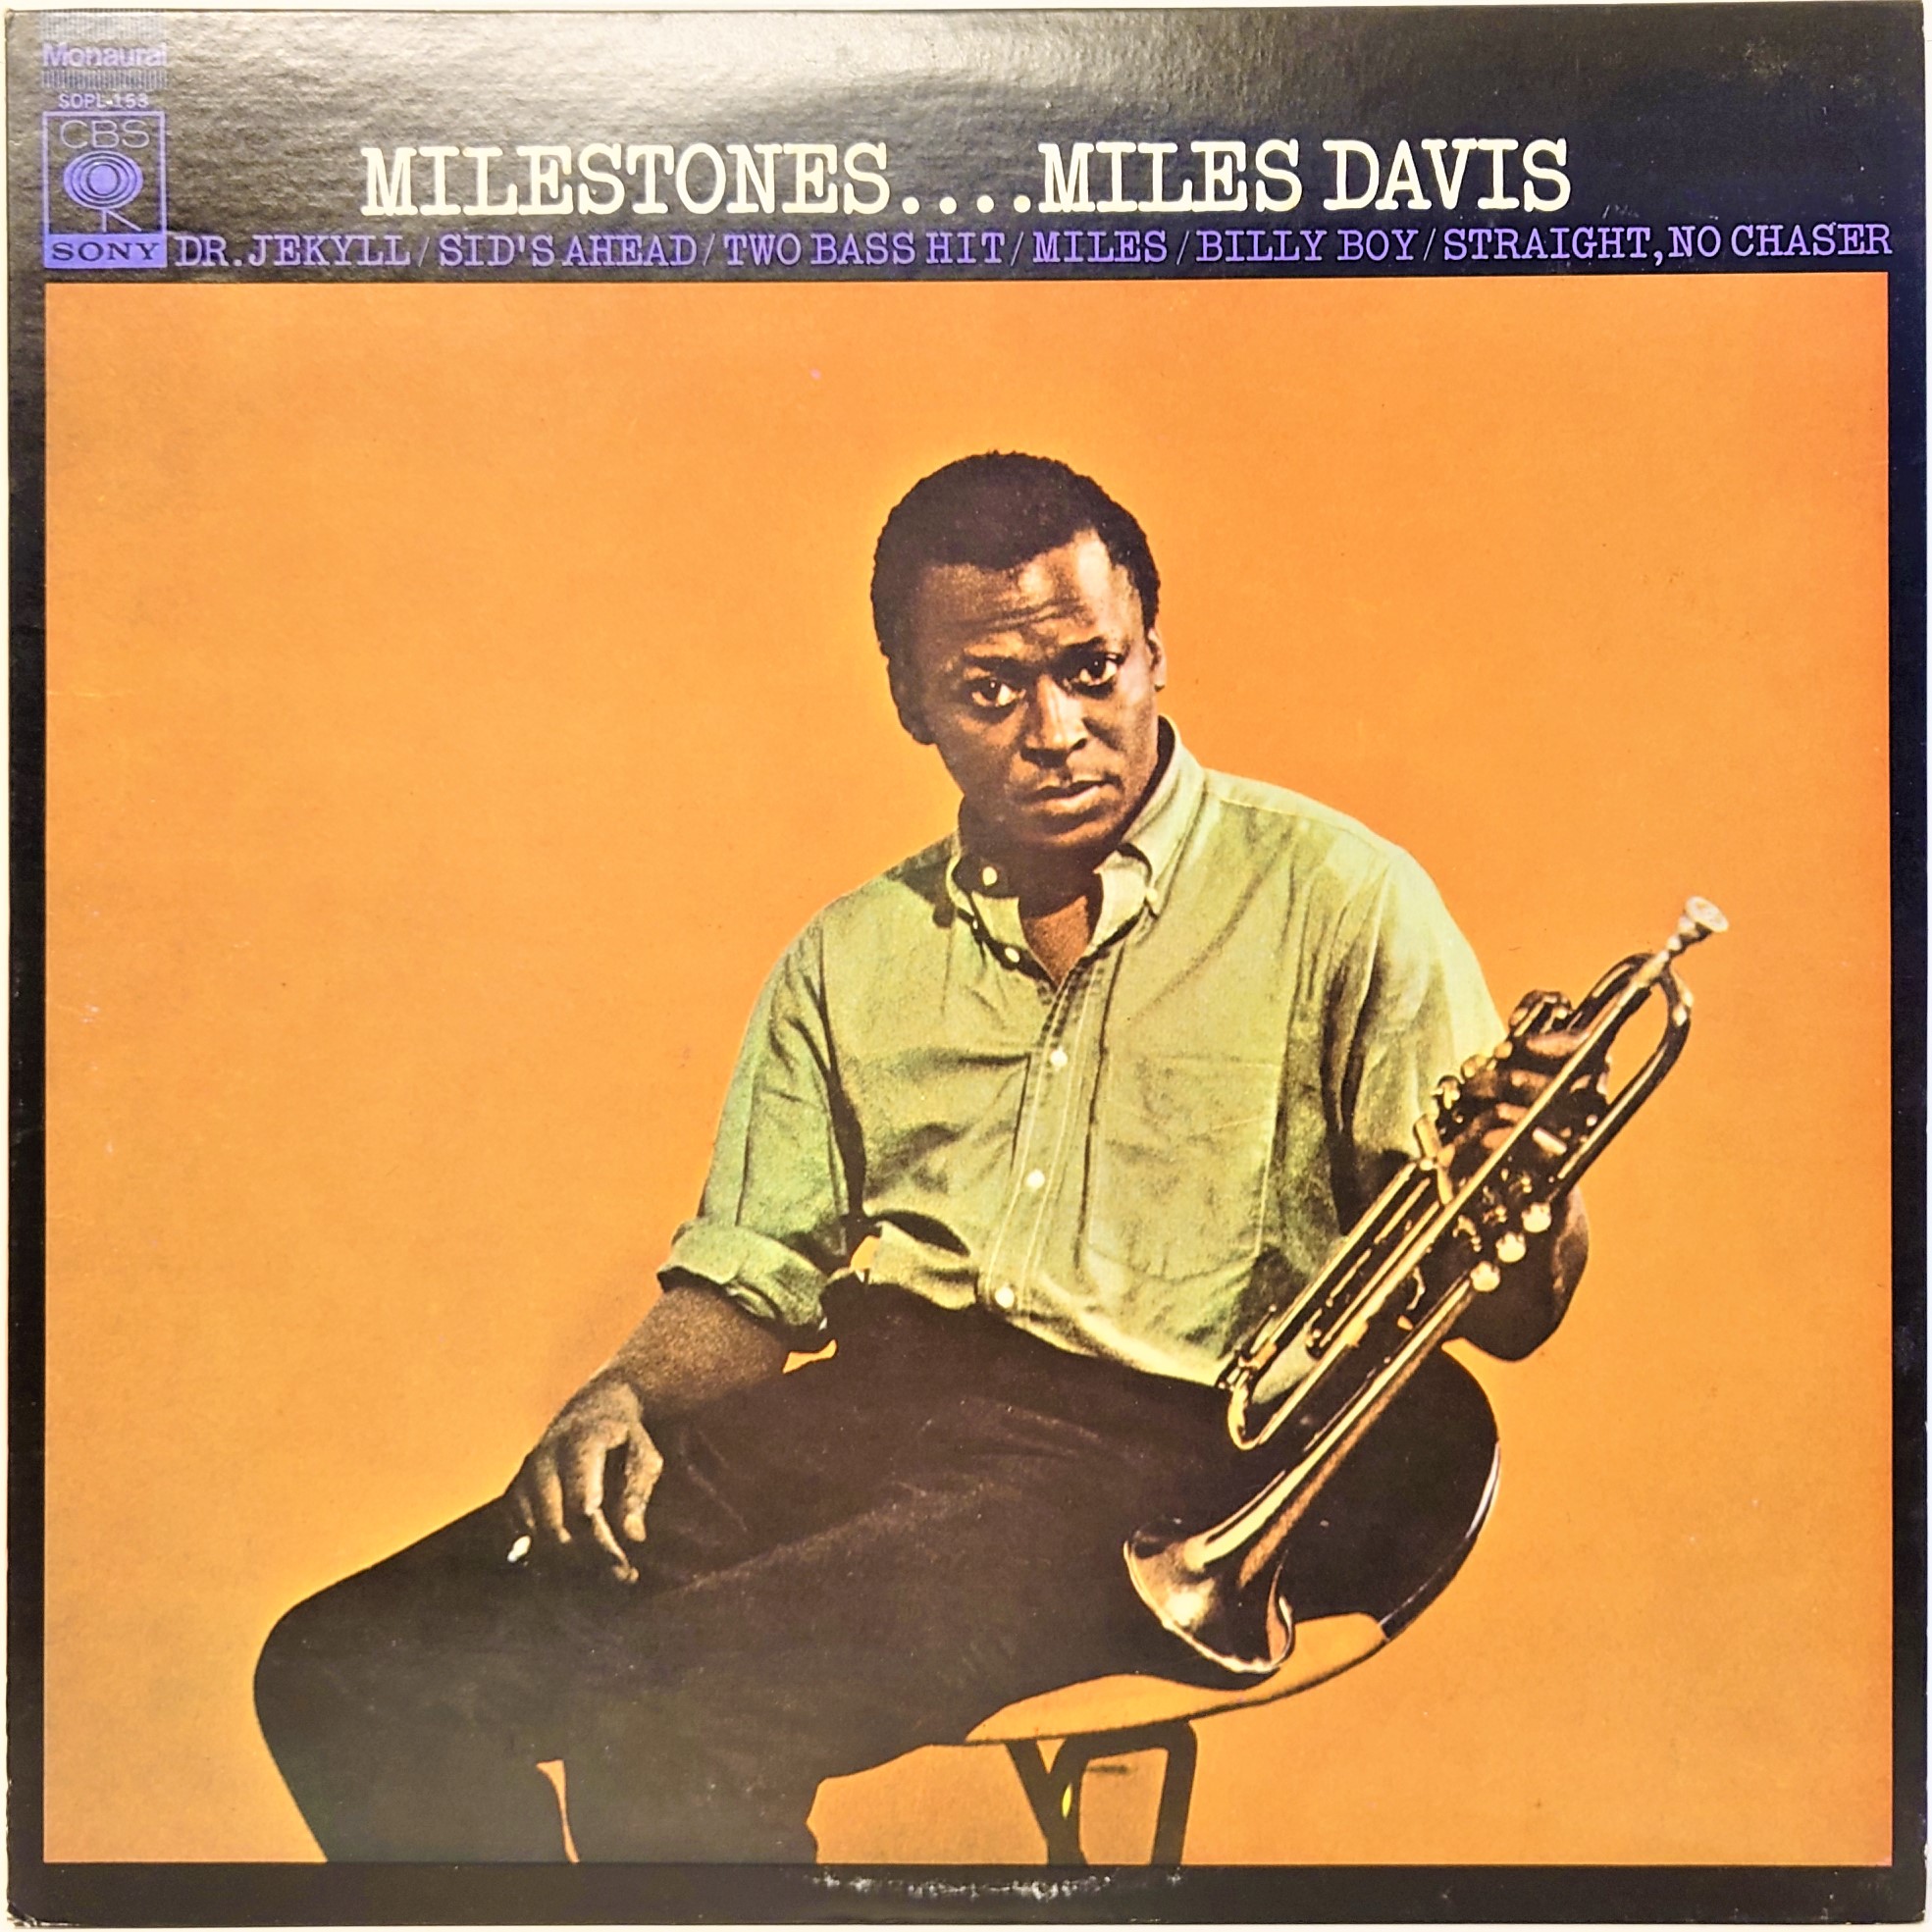 Miles Davis ‎– Milestones | 中古レコード通販・買取のアカル・レコーズ